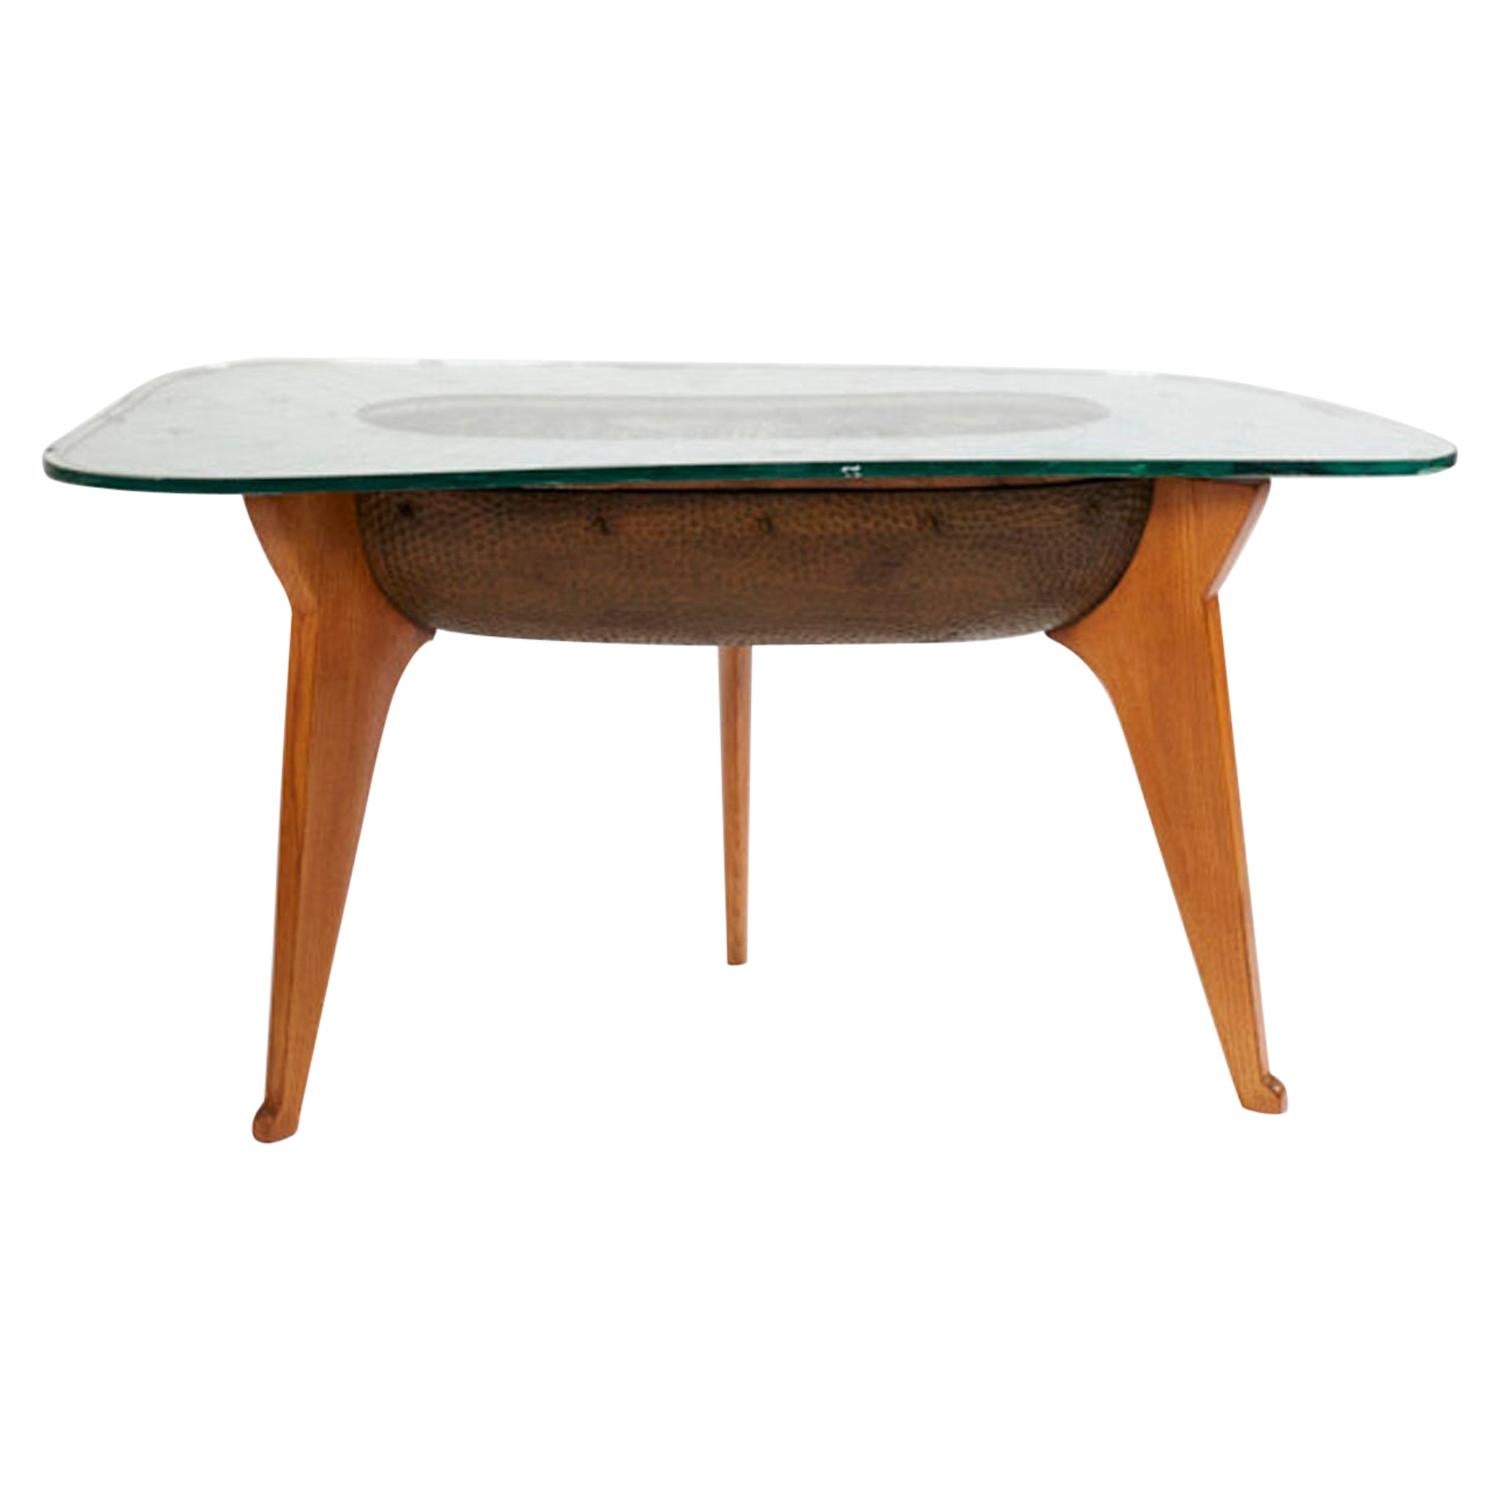 Meroni & Fossati Late 1930s Carved Wood and Ceramic Aquarium Lightning Table